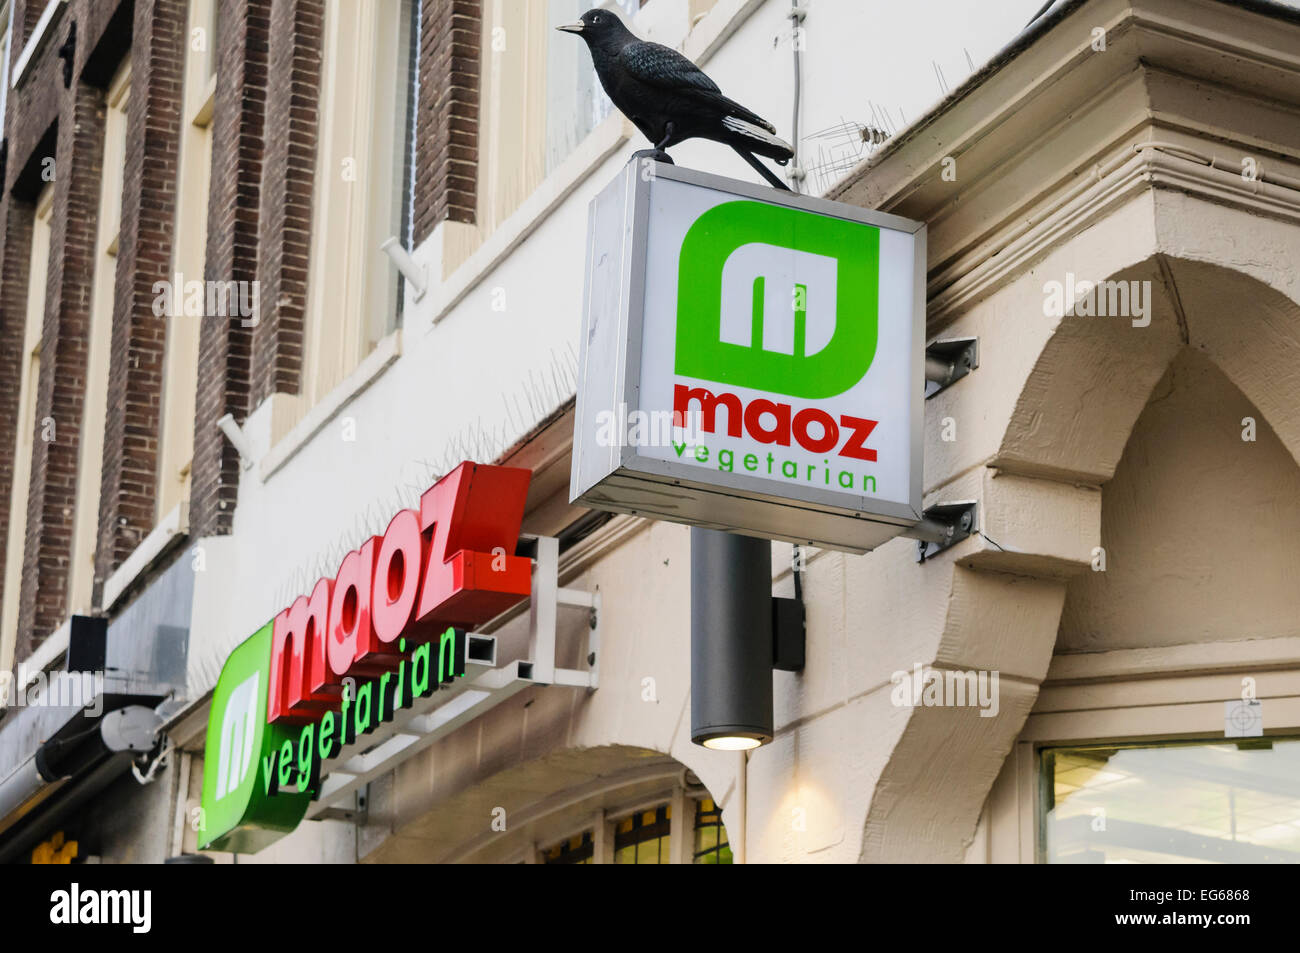 Maoz vegetariano, Damrak, Amsterdam. Una catena di falafel i ristoranti fast food, che serve puramente cibo vegetariano. Foto Stock